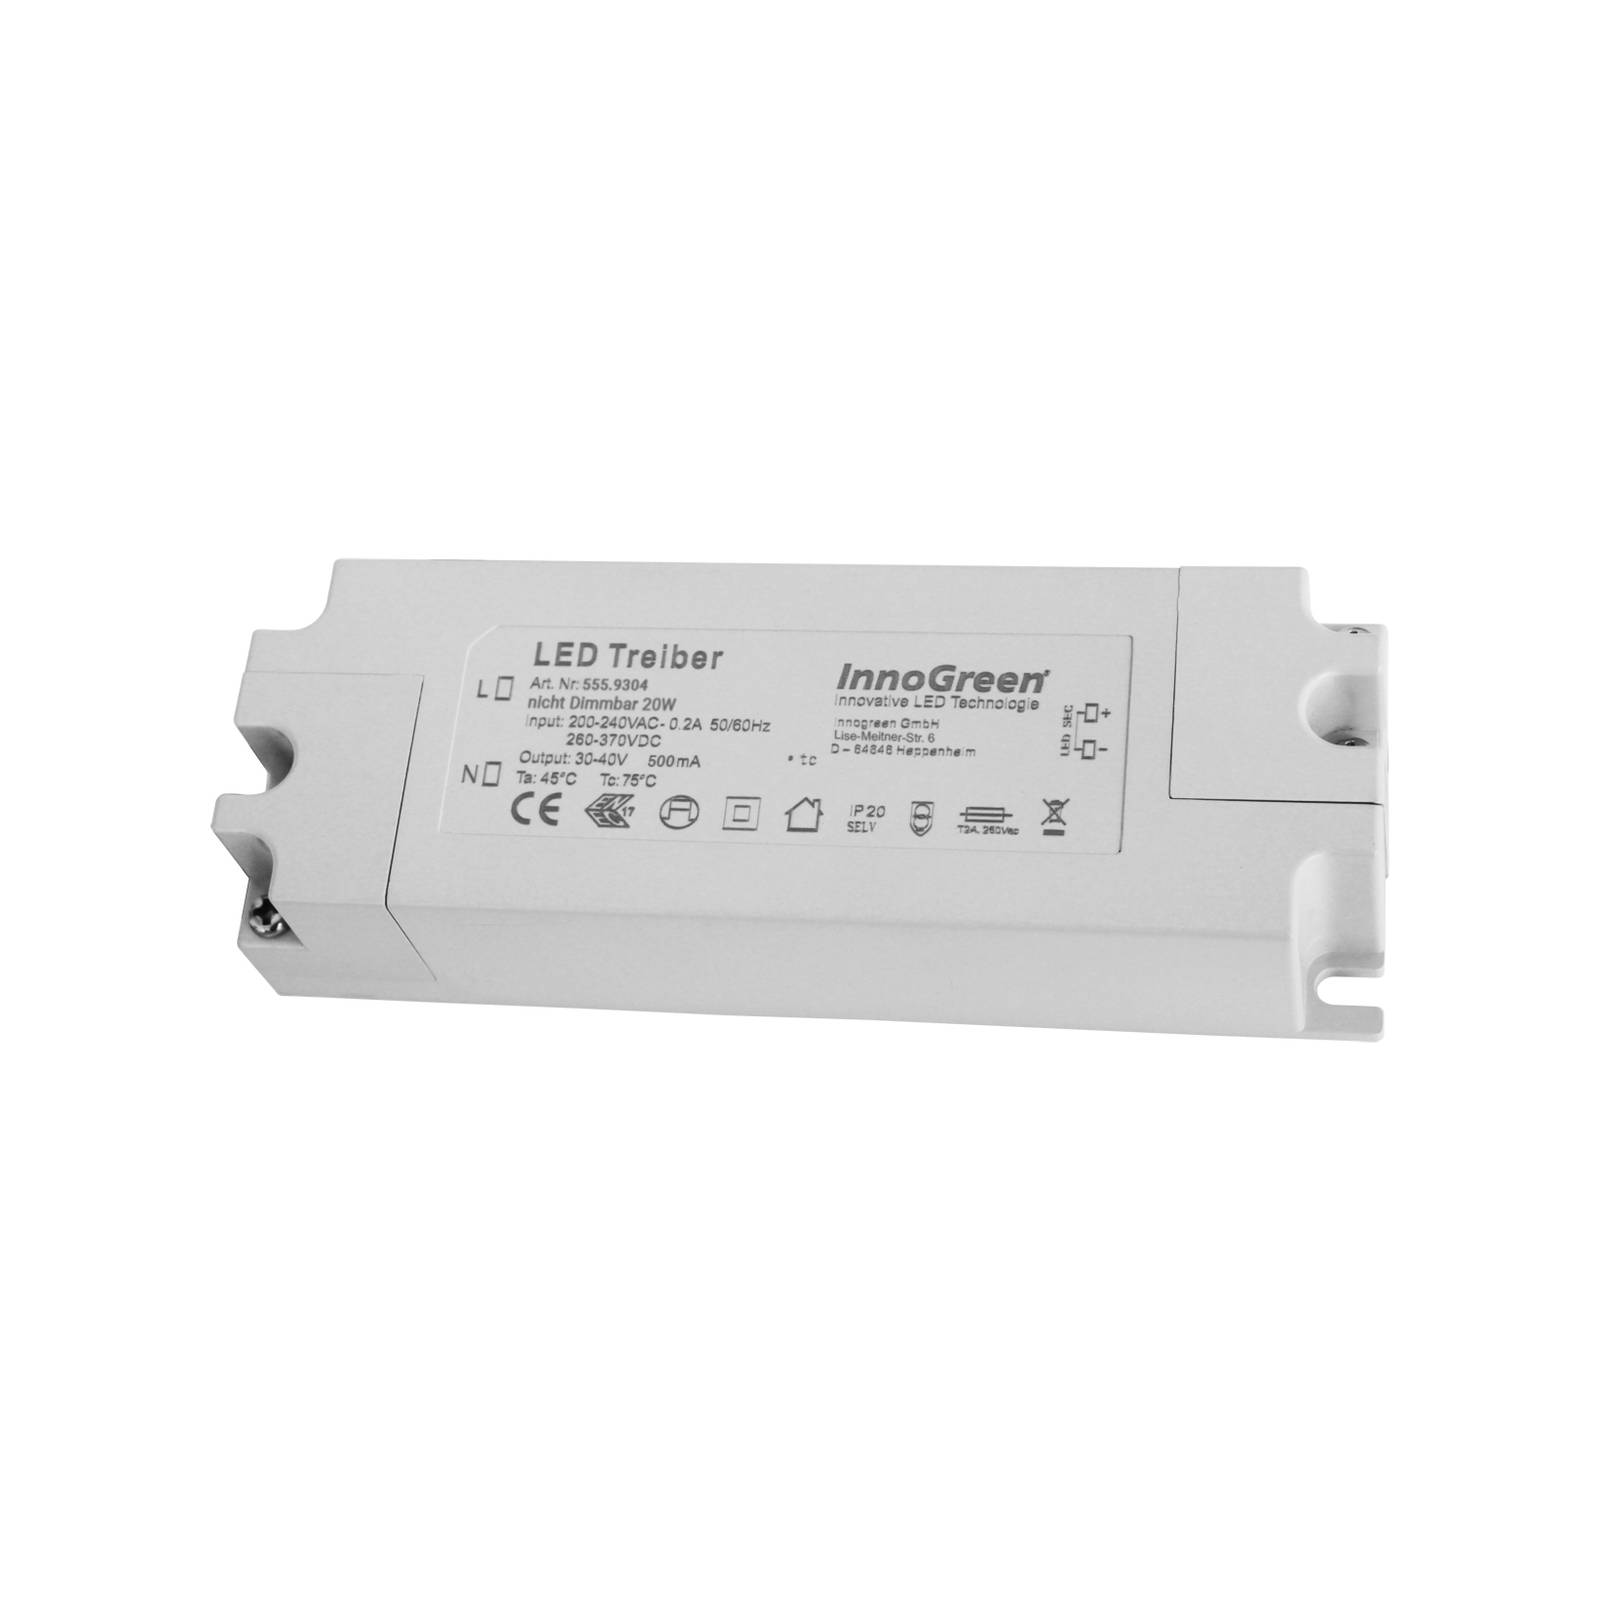 InnoGreen InnoGreen LED driver 220-240 V (AC/DC) 20W